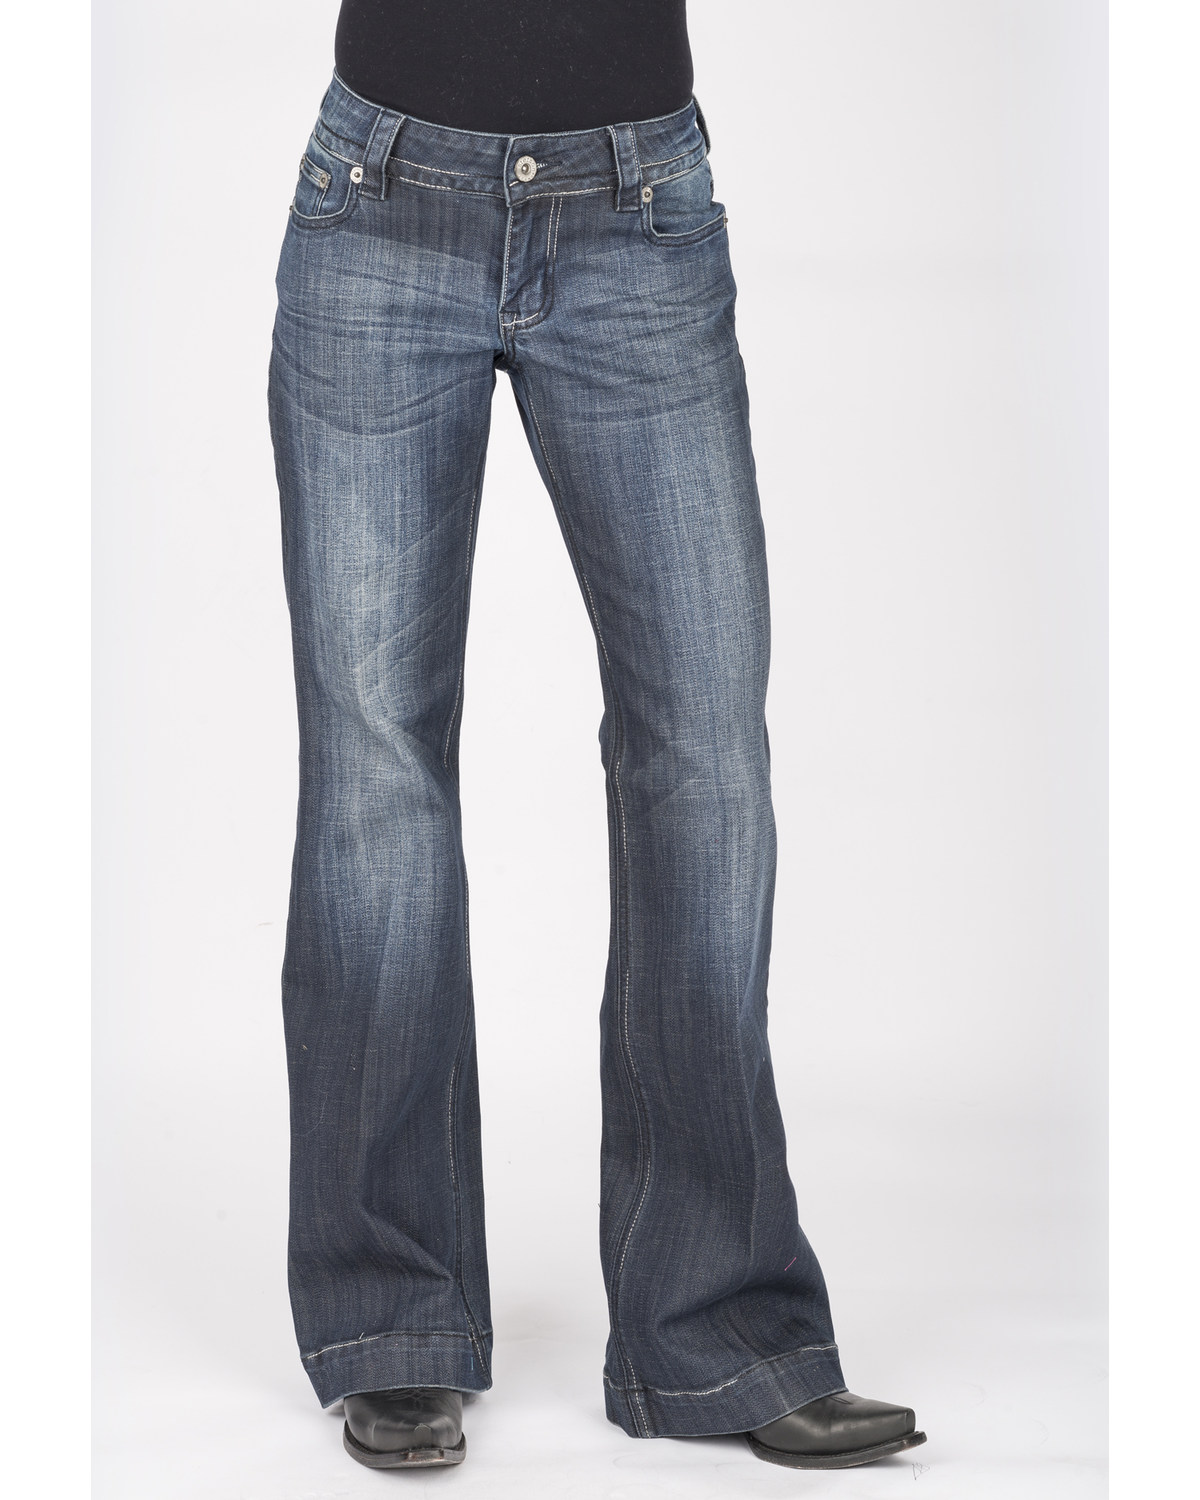 Stetson Women's Dark 214 Trouser Fit Jeans | Boot Barn